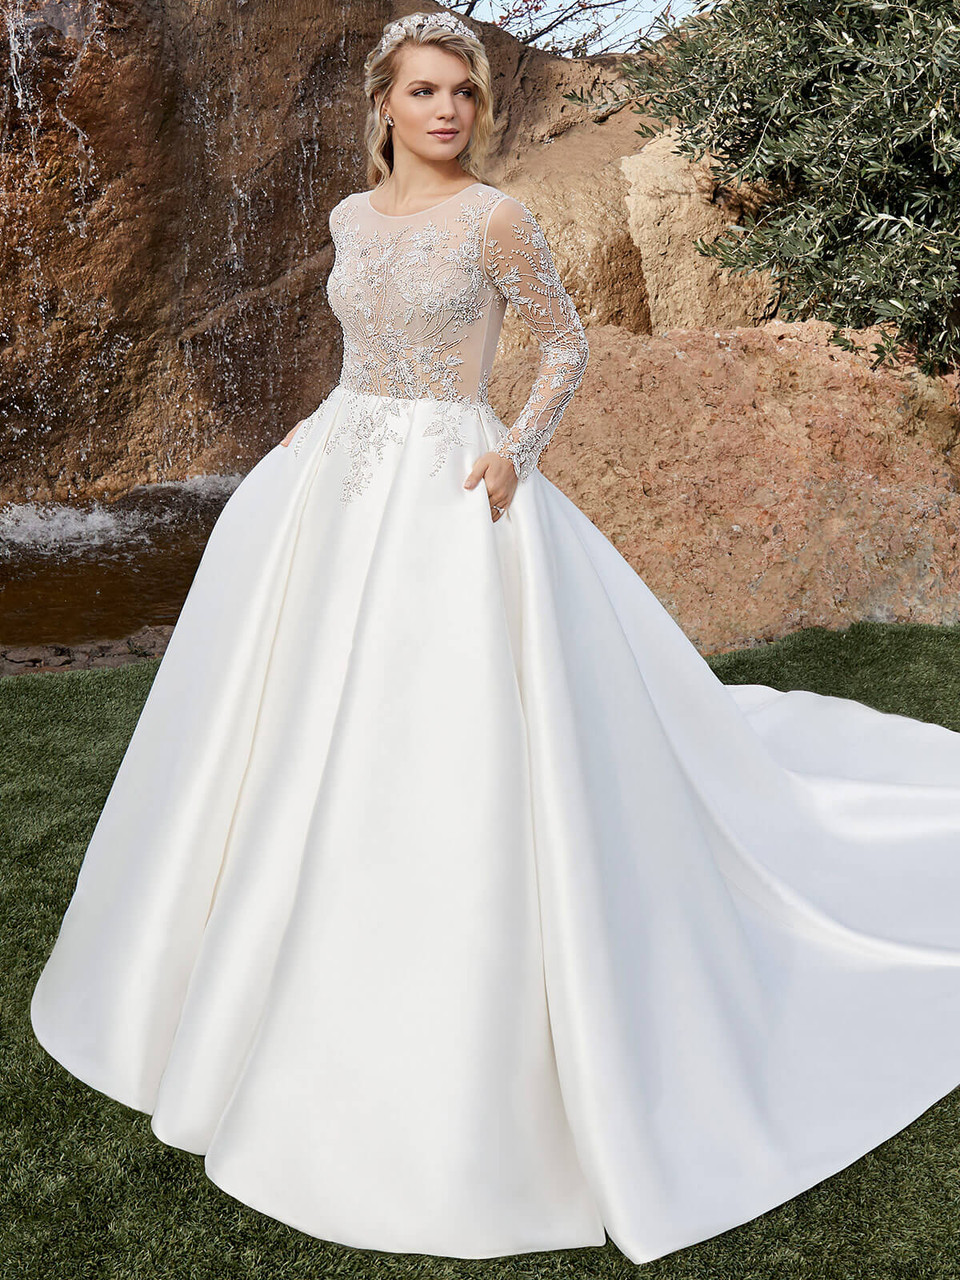 See New Disney Princess Wedding Dresses From Allure Bridals | POPSUGAR Love  & Sex